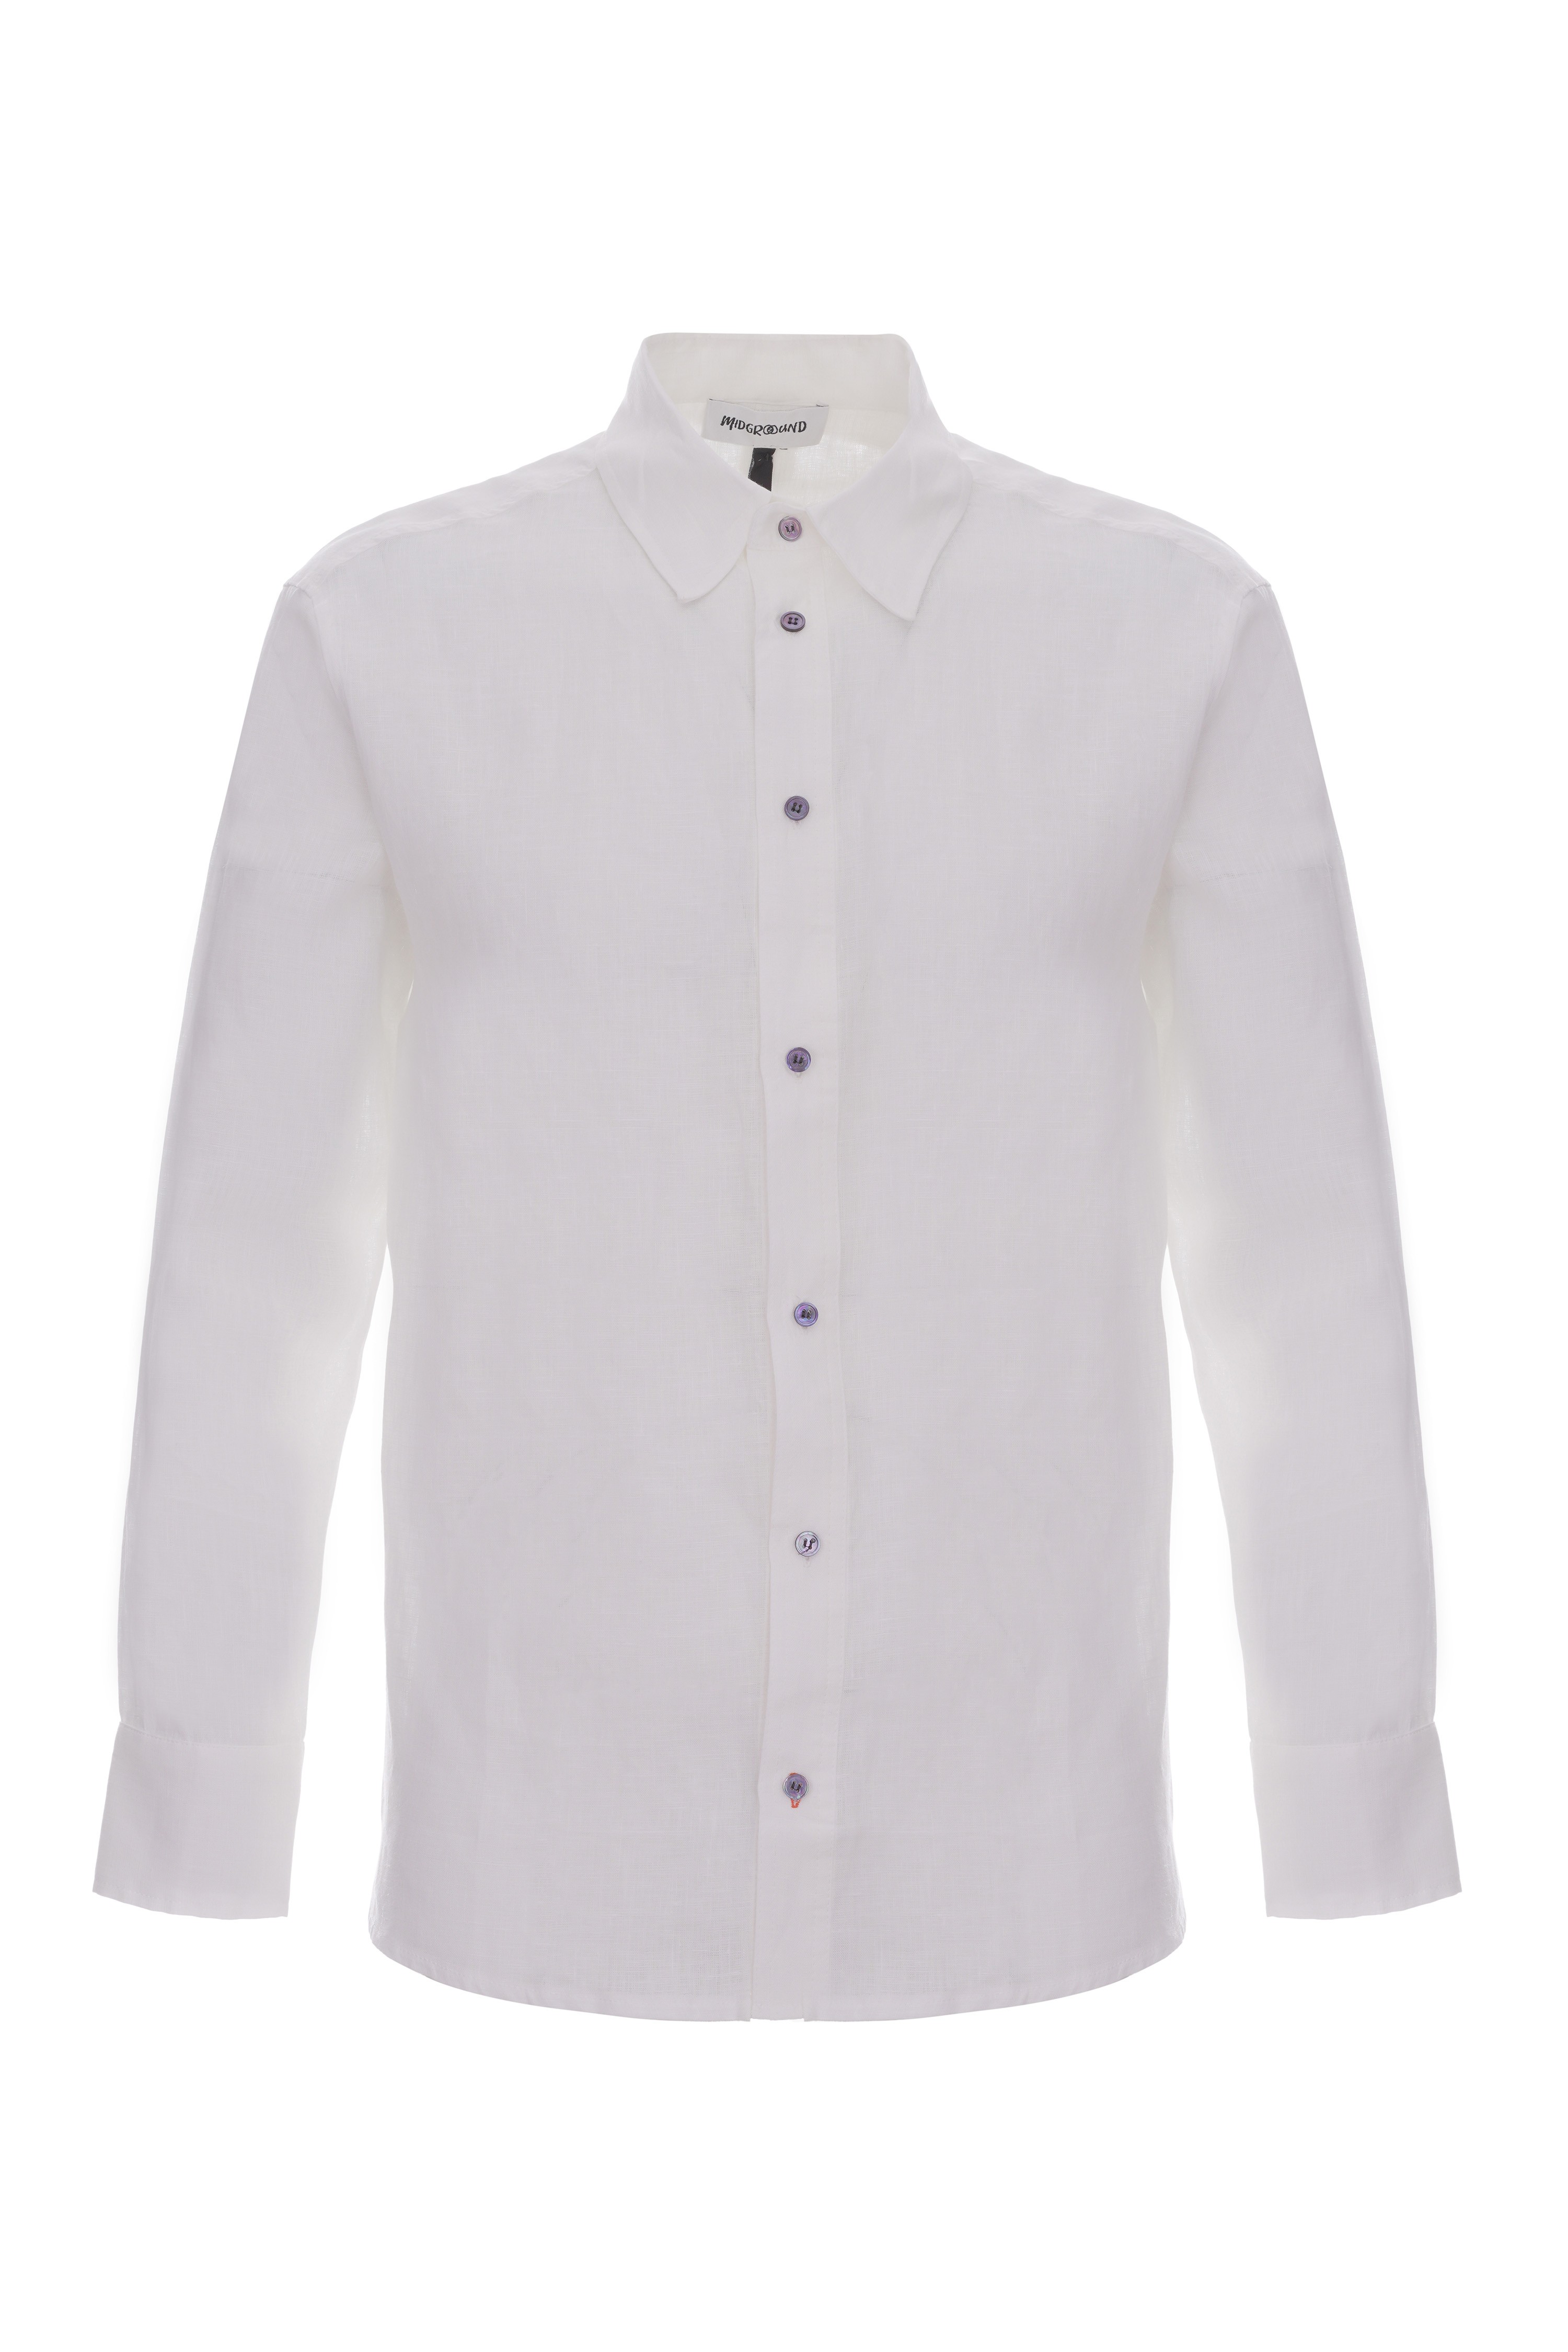 Drop #M071B Shirt - White